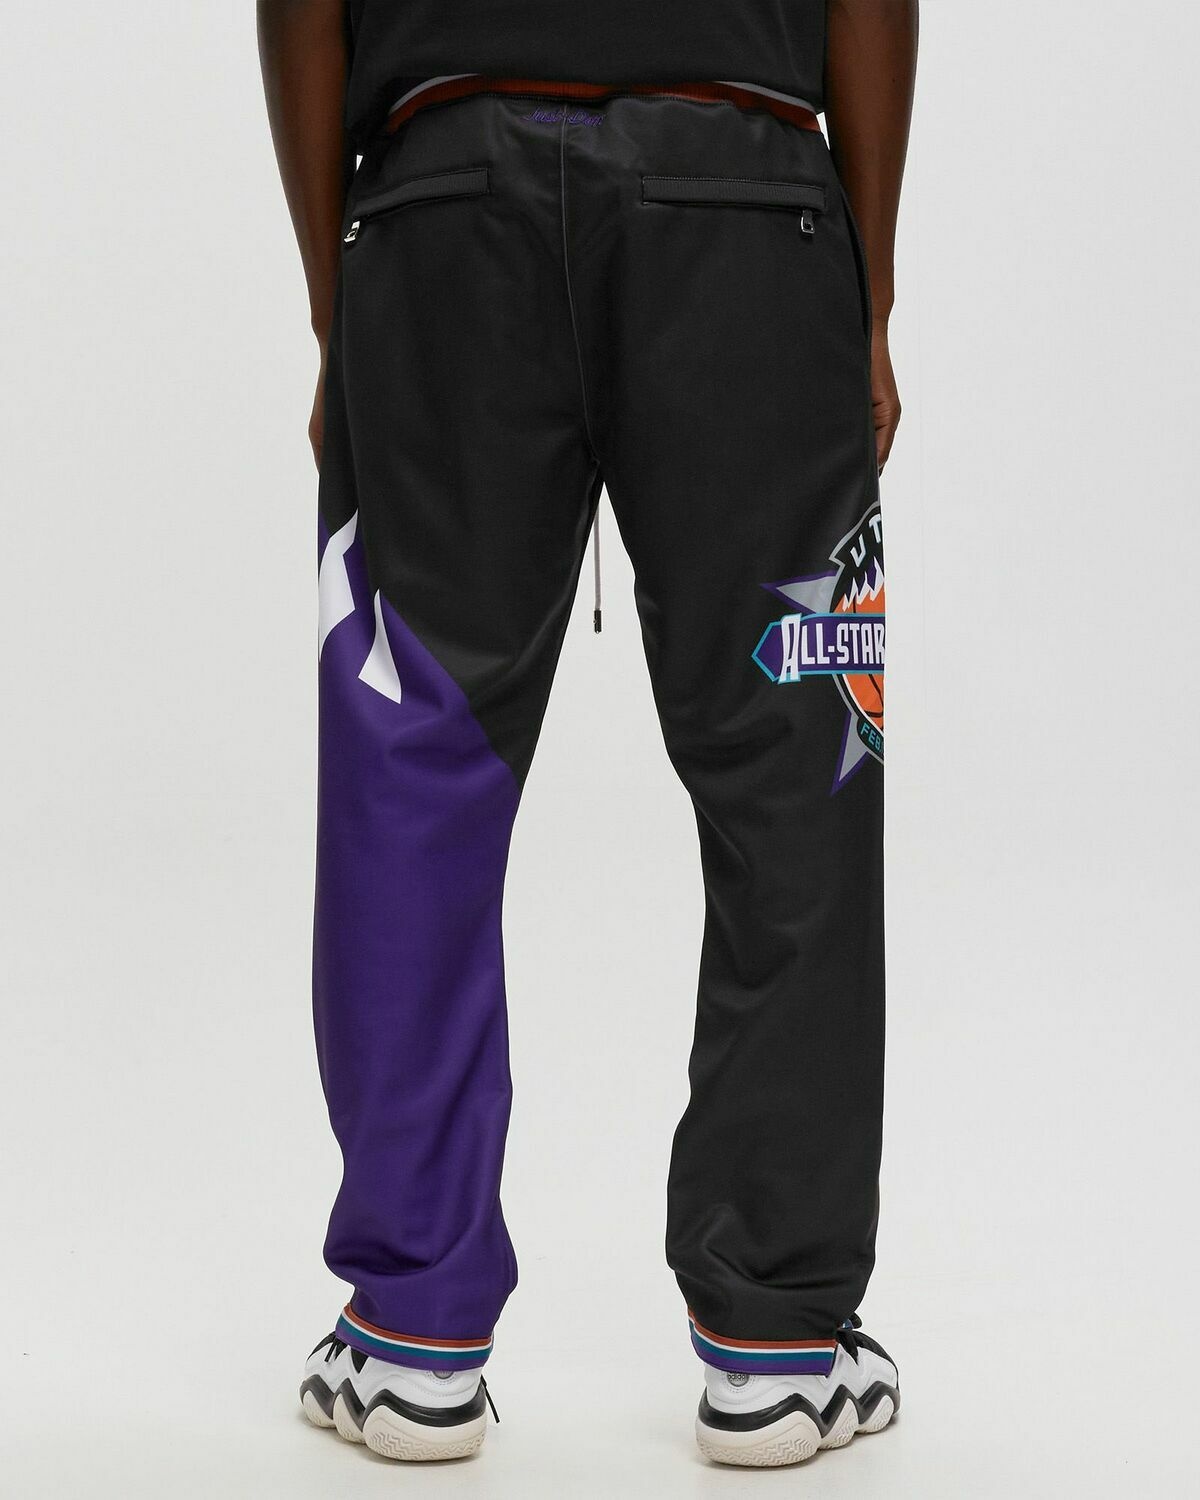 Mitchell & Ness Nba Just Don Utah Jazz Warm Up Pants All Star 1993 Black - Mens - Team Pants/Track Pants